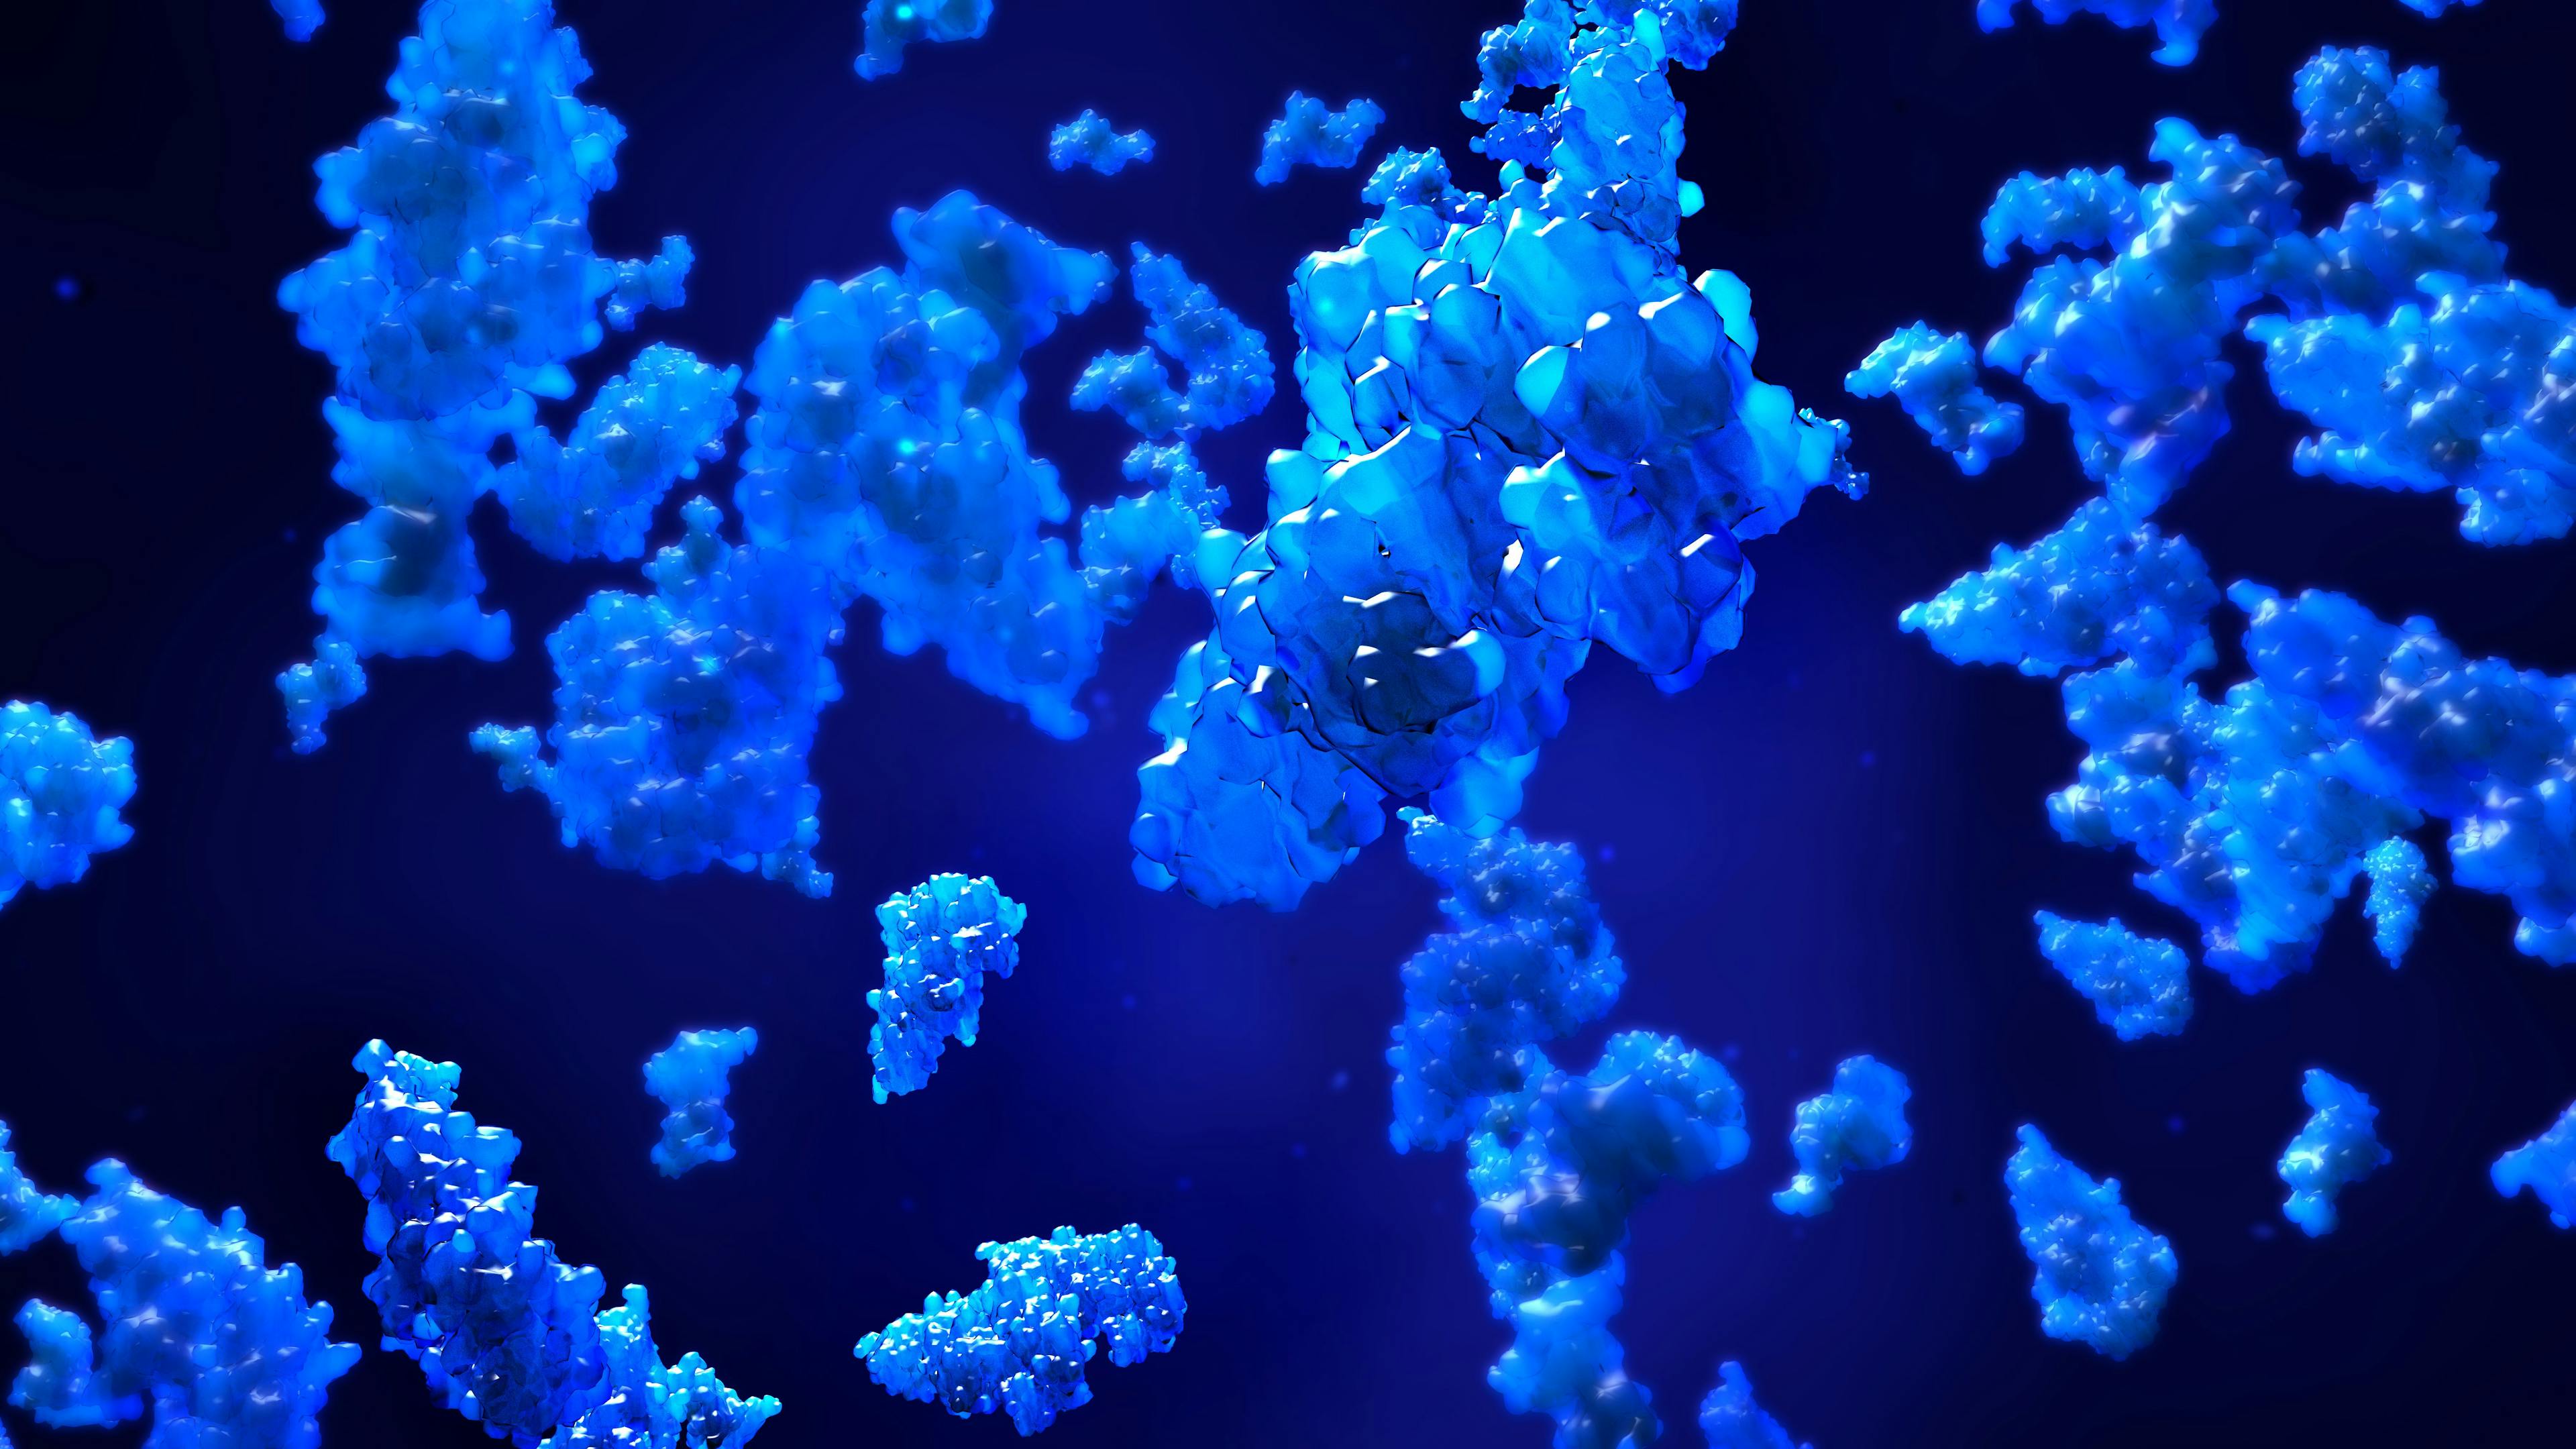 3d illustration proteins or enzymes | Image Credit: © Design Cells - stock.adobe.com